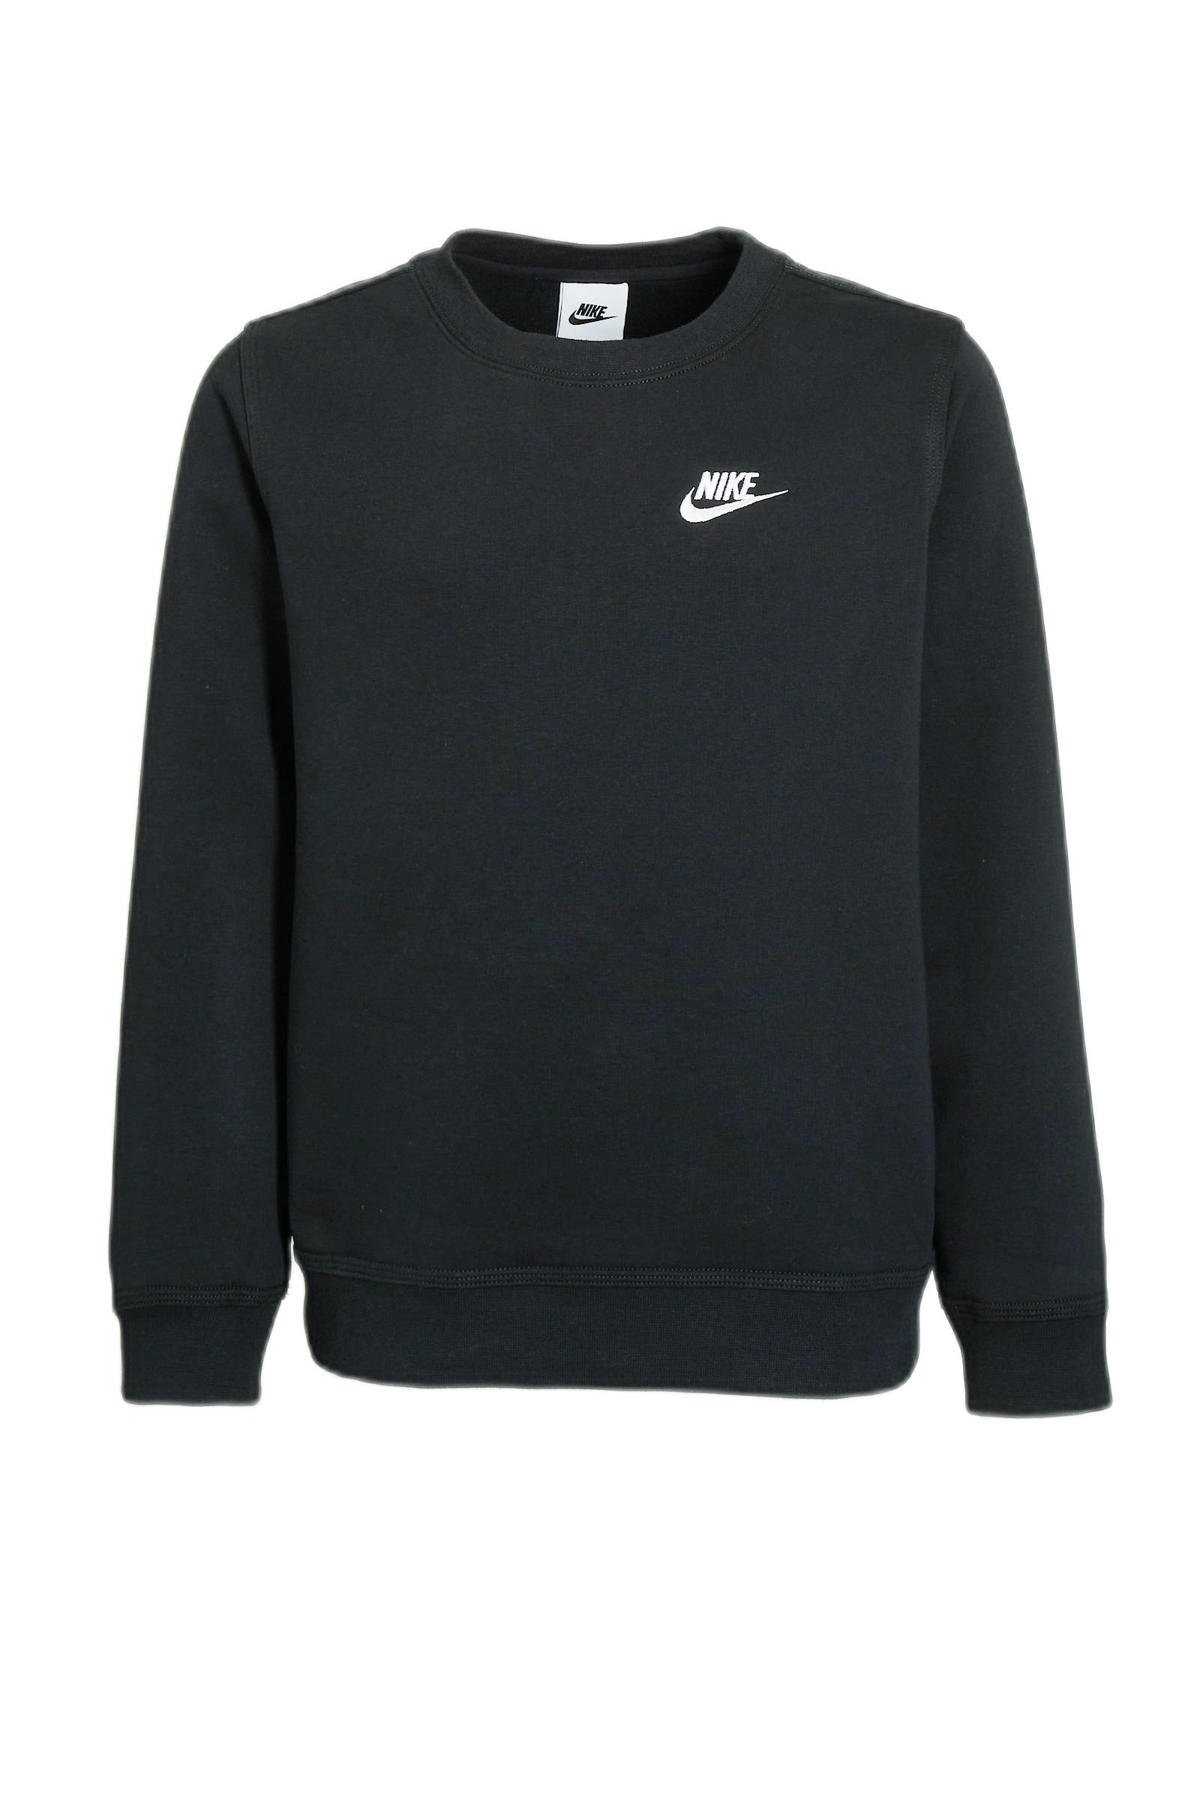 Ijdelheid Vriend B olie Nike trui met logo zwart | wehkamp